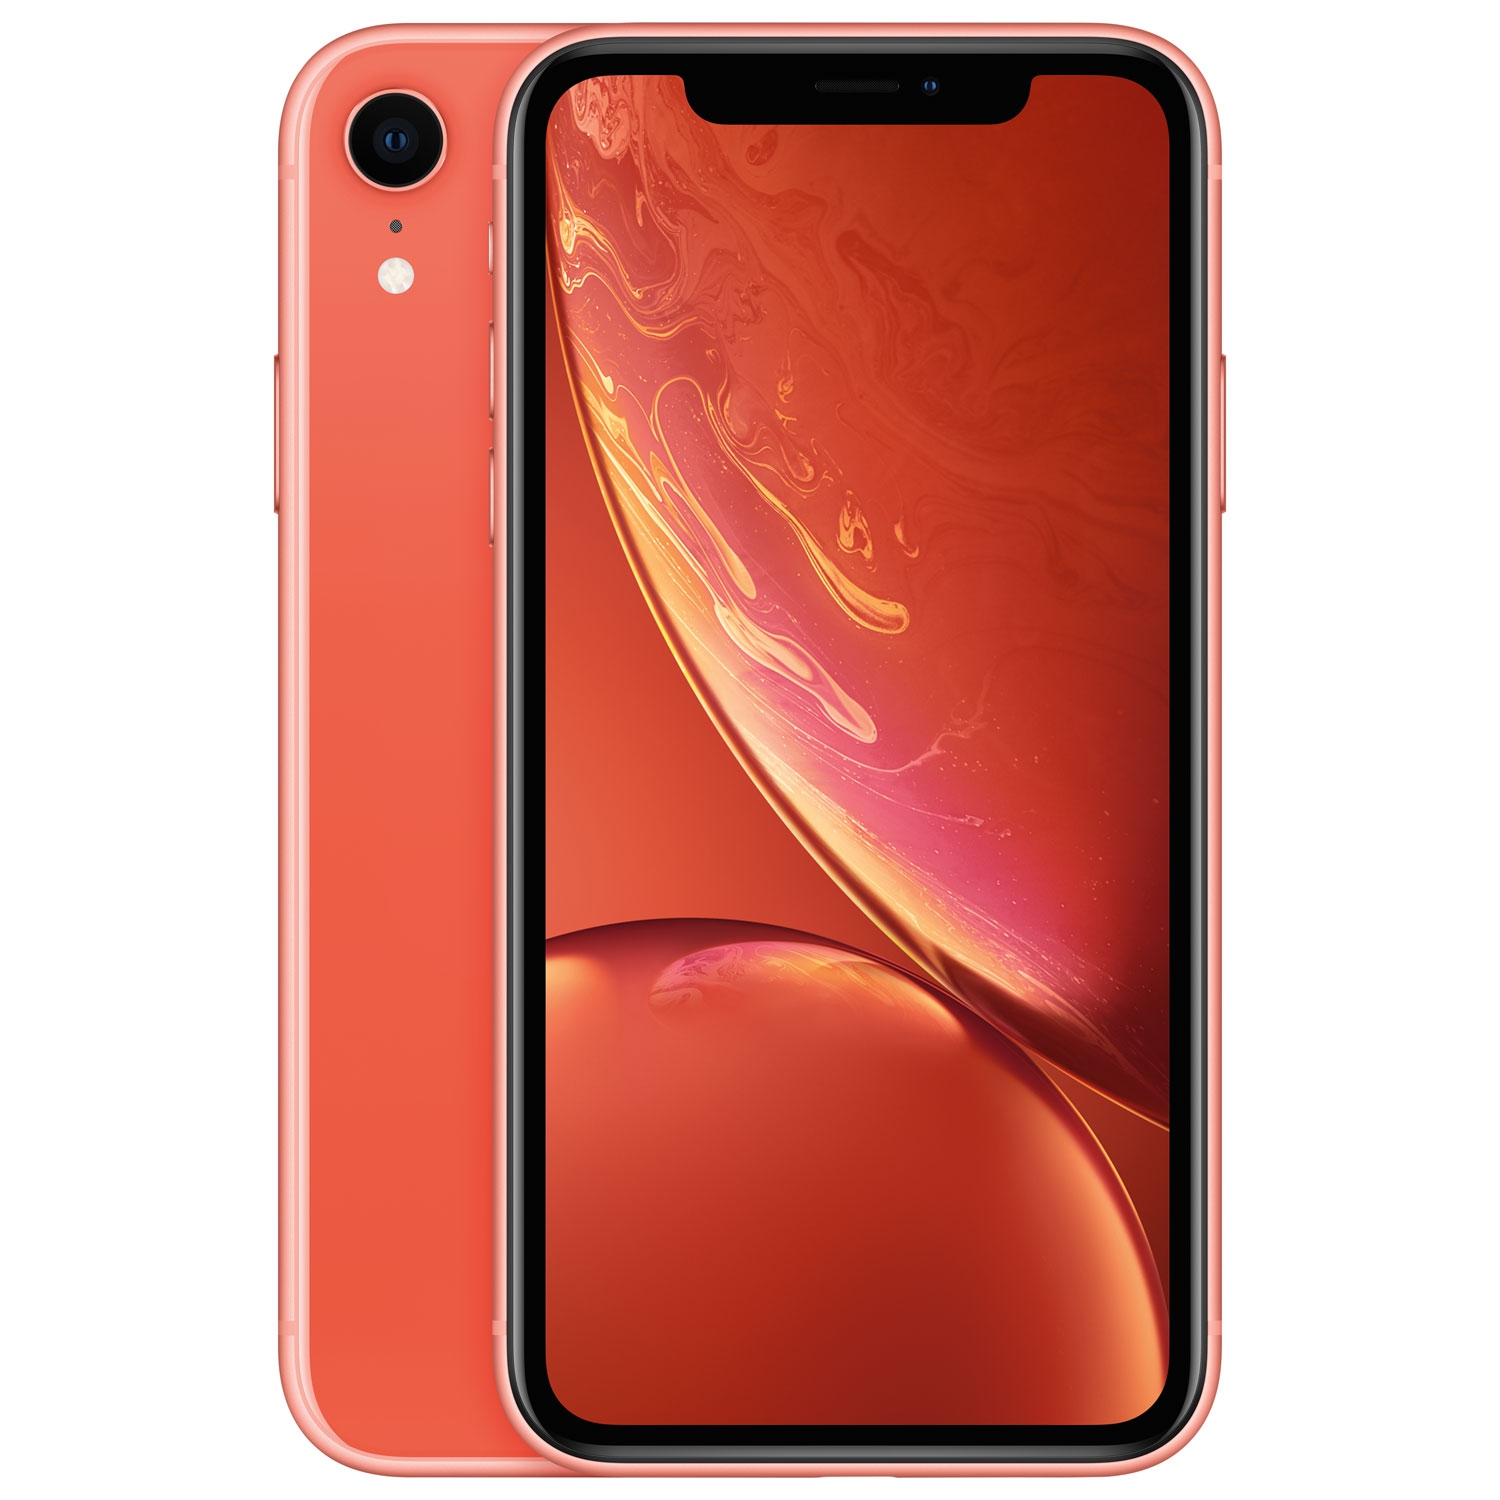 Refurbished (Excellent) - Apple iPhone XR 128GB Smartphone - Coral - Unlocked - Certified Refurbished